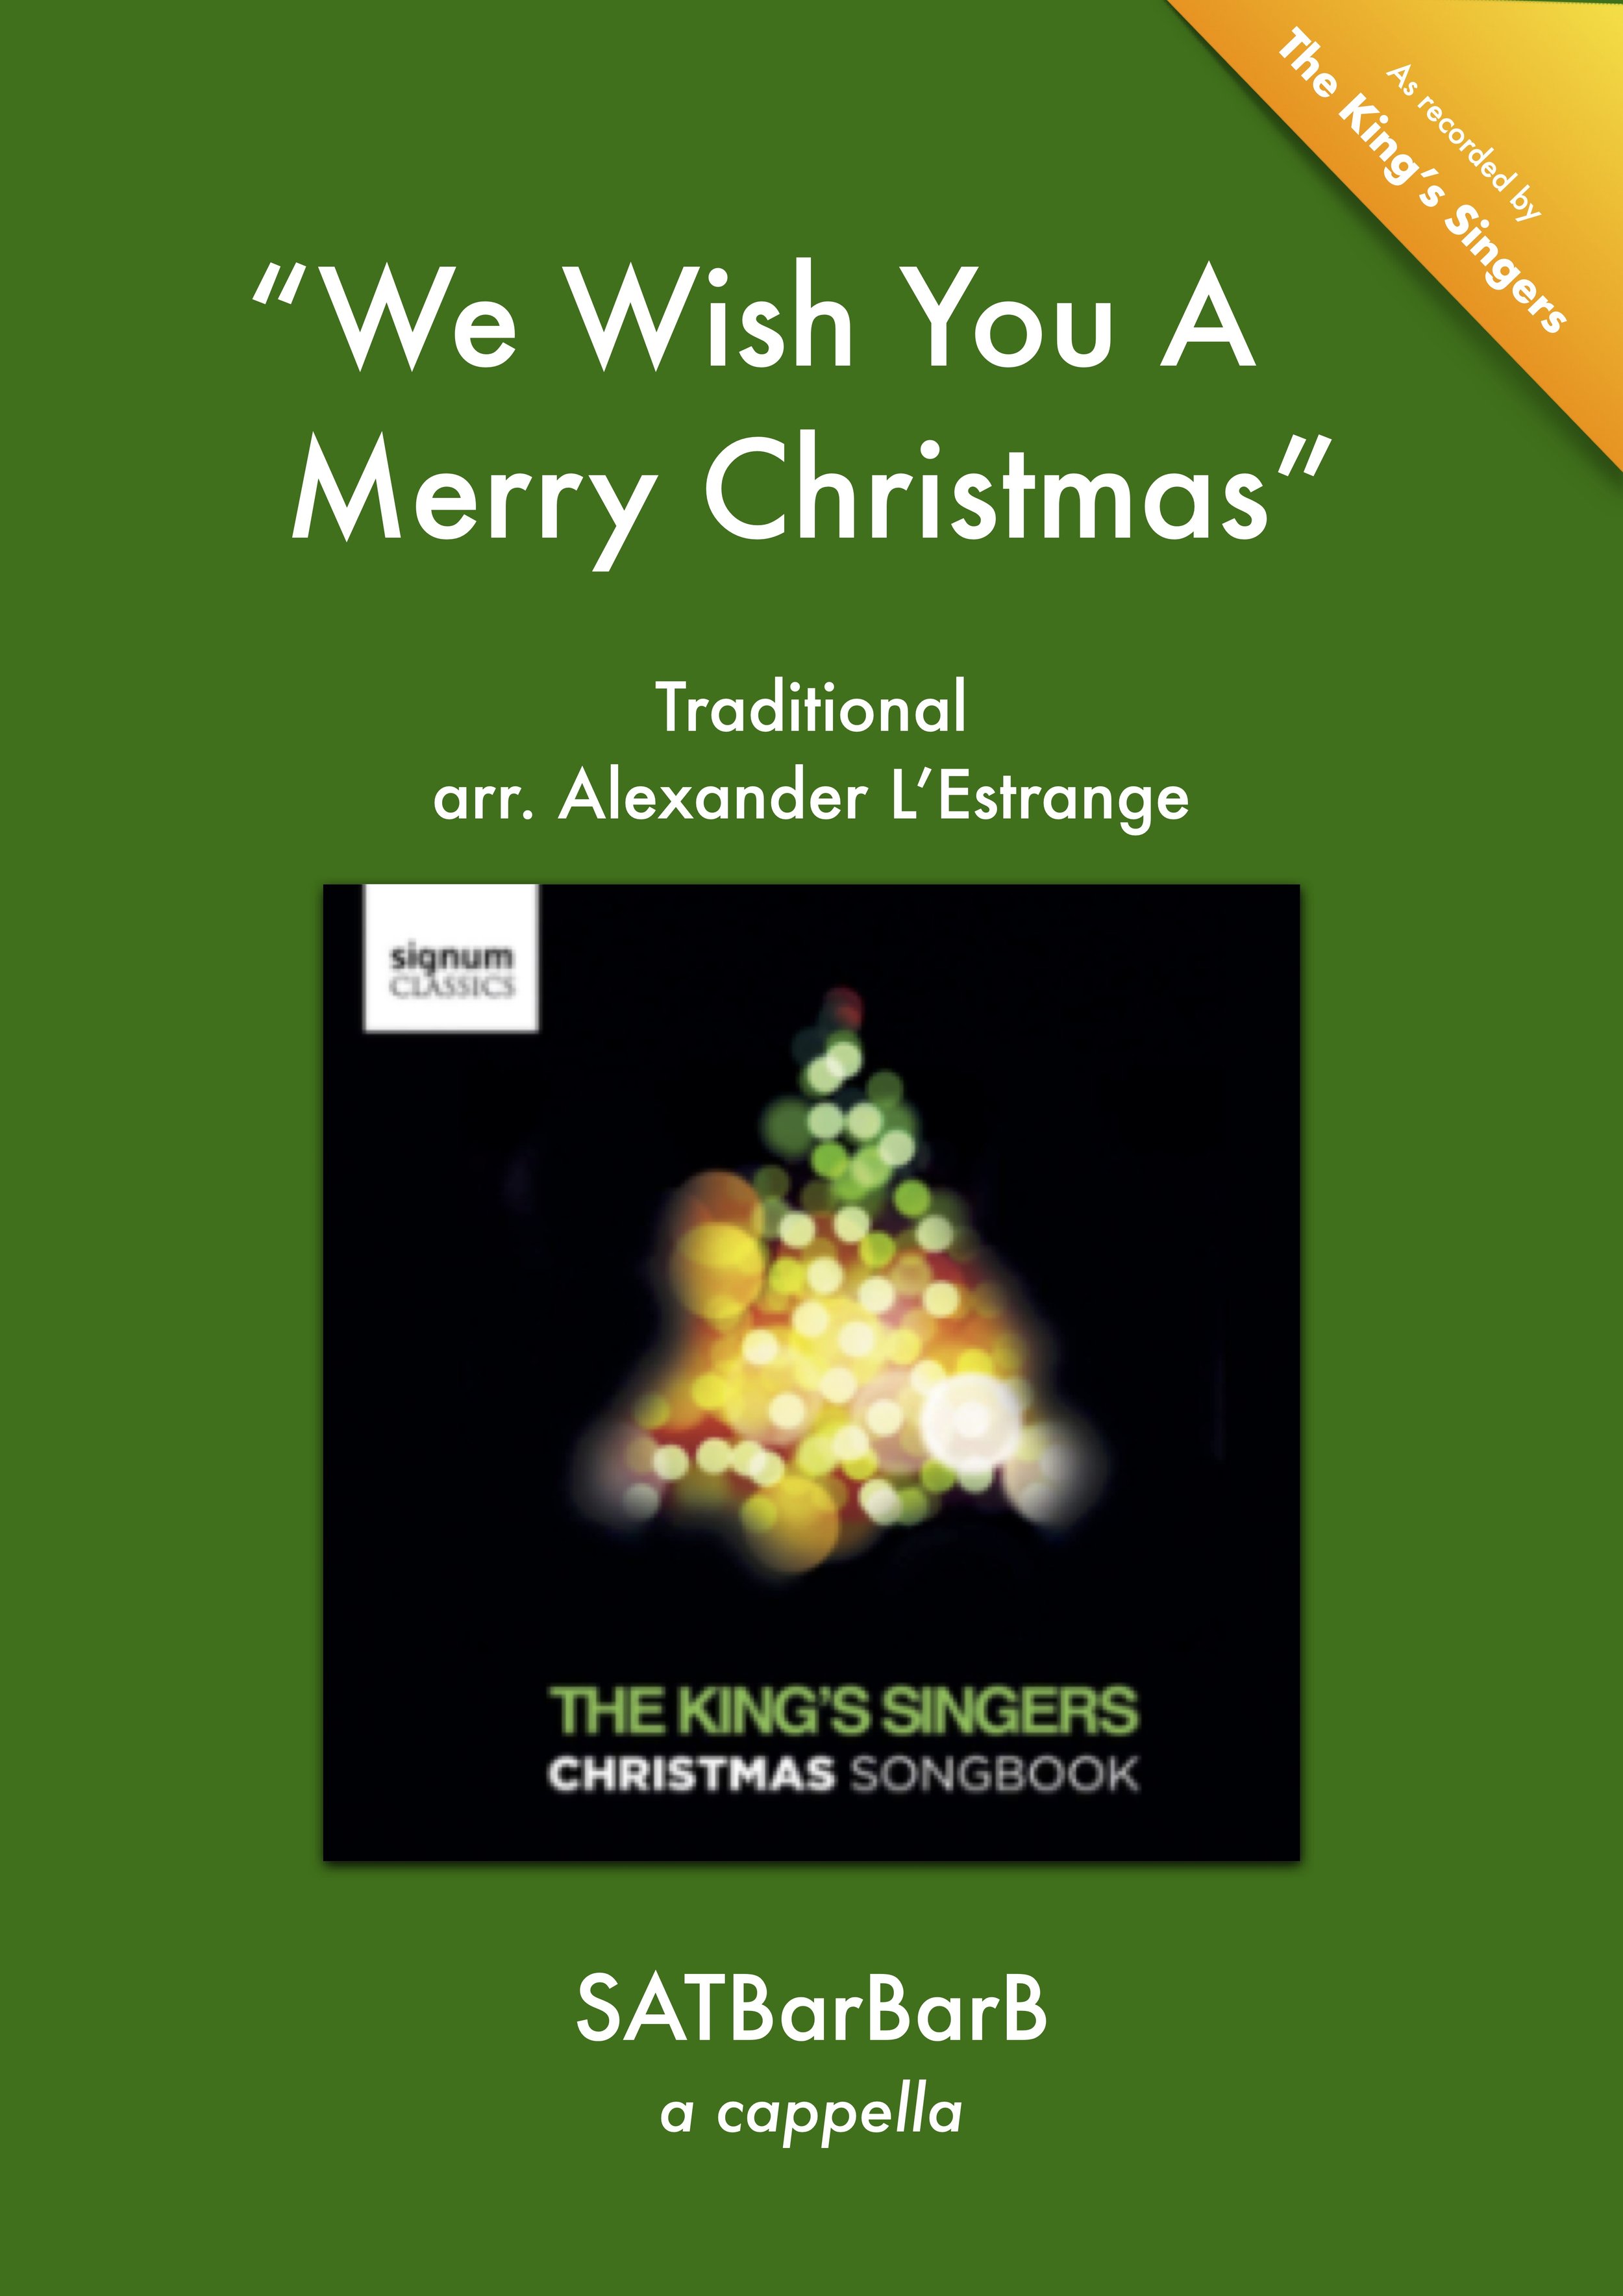 We Wish You a Merry Christmas arr. Alexander L'Estrange.jpg